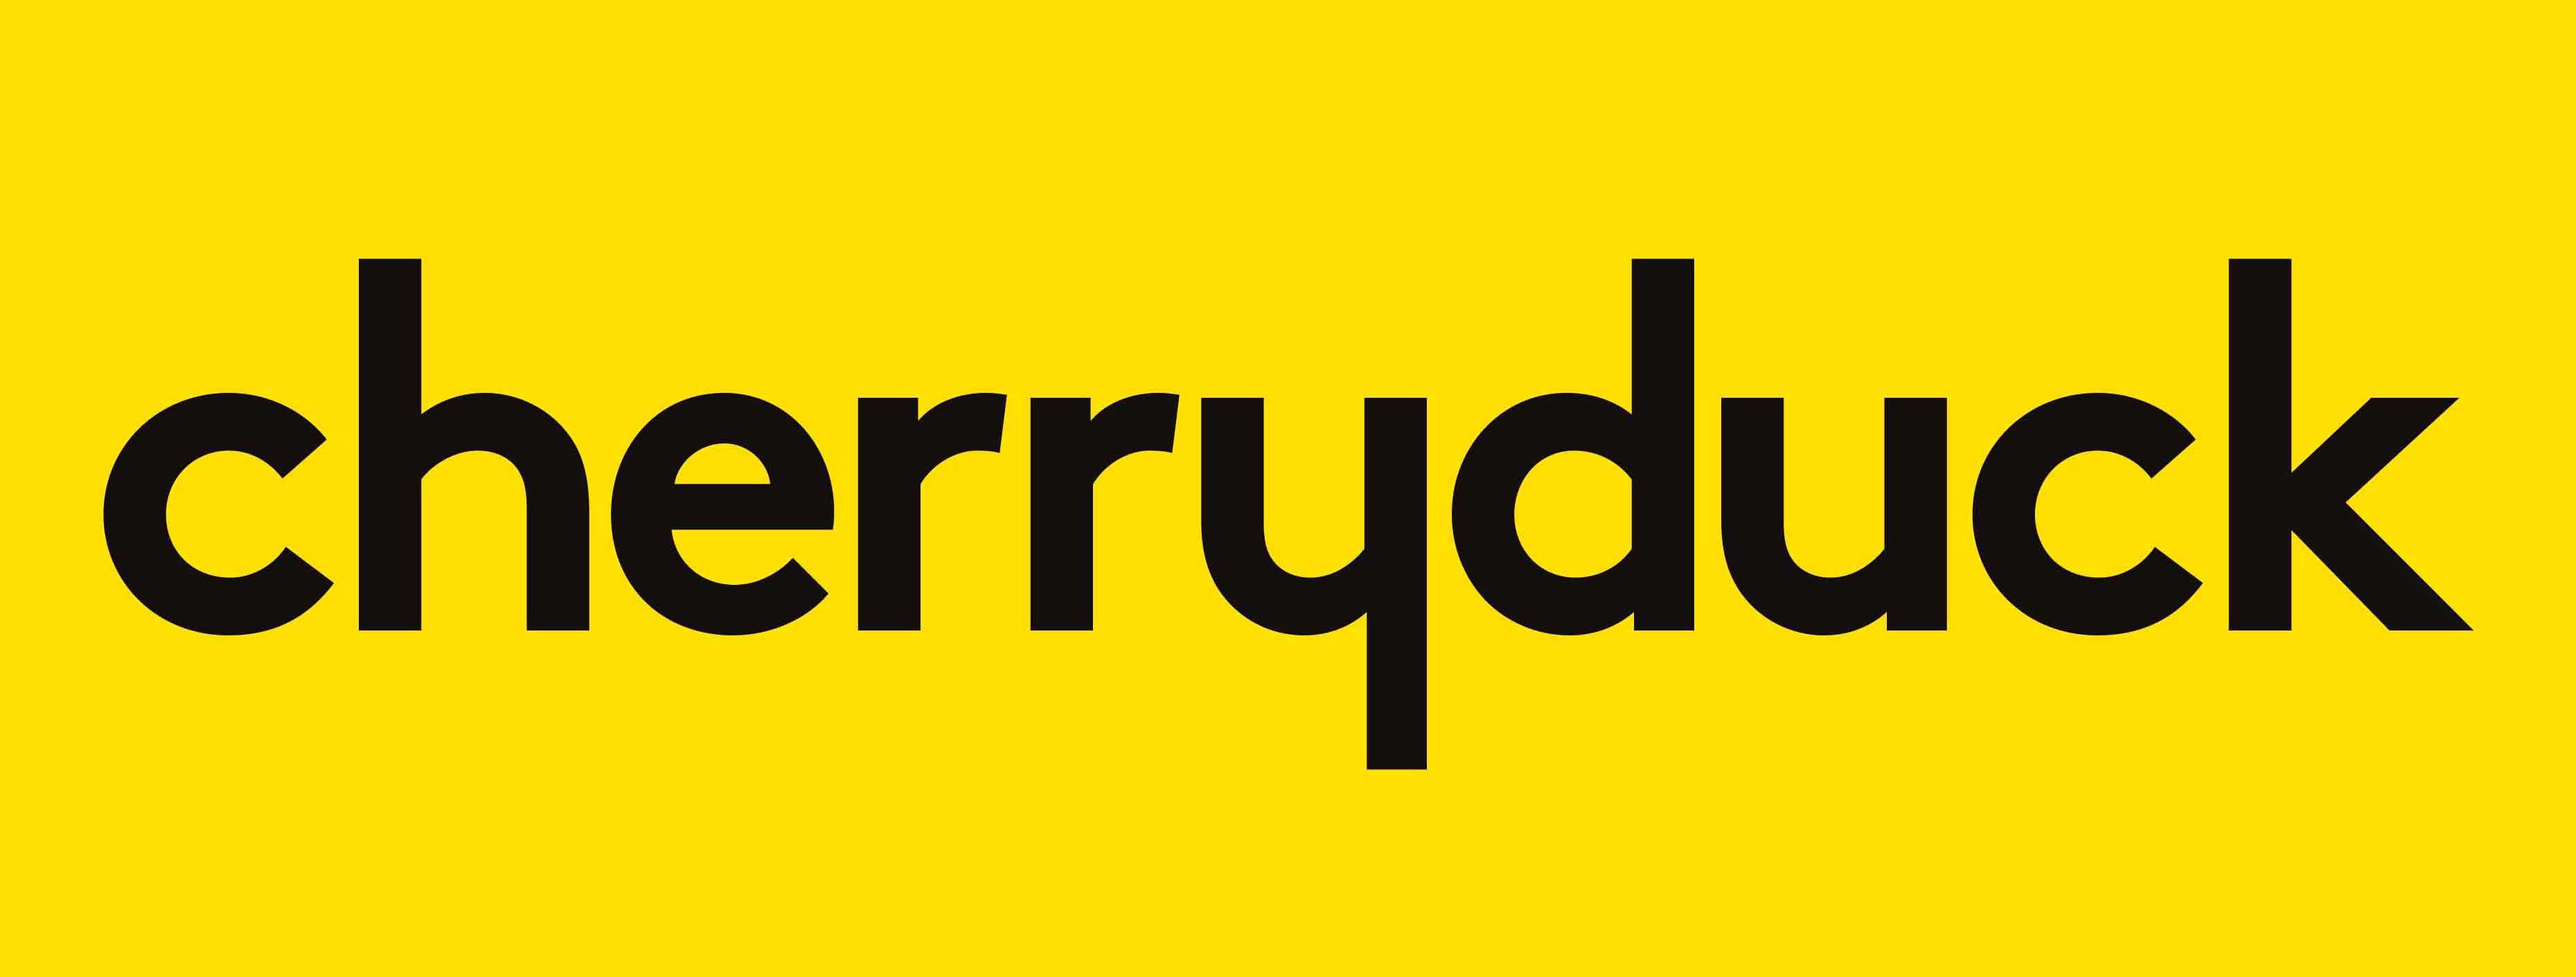 logo for Cherryduck